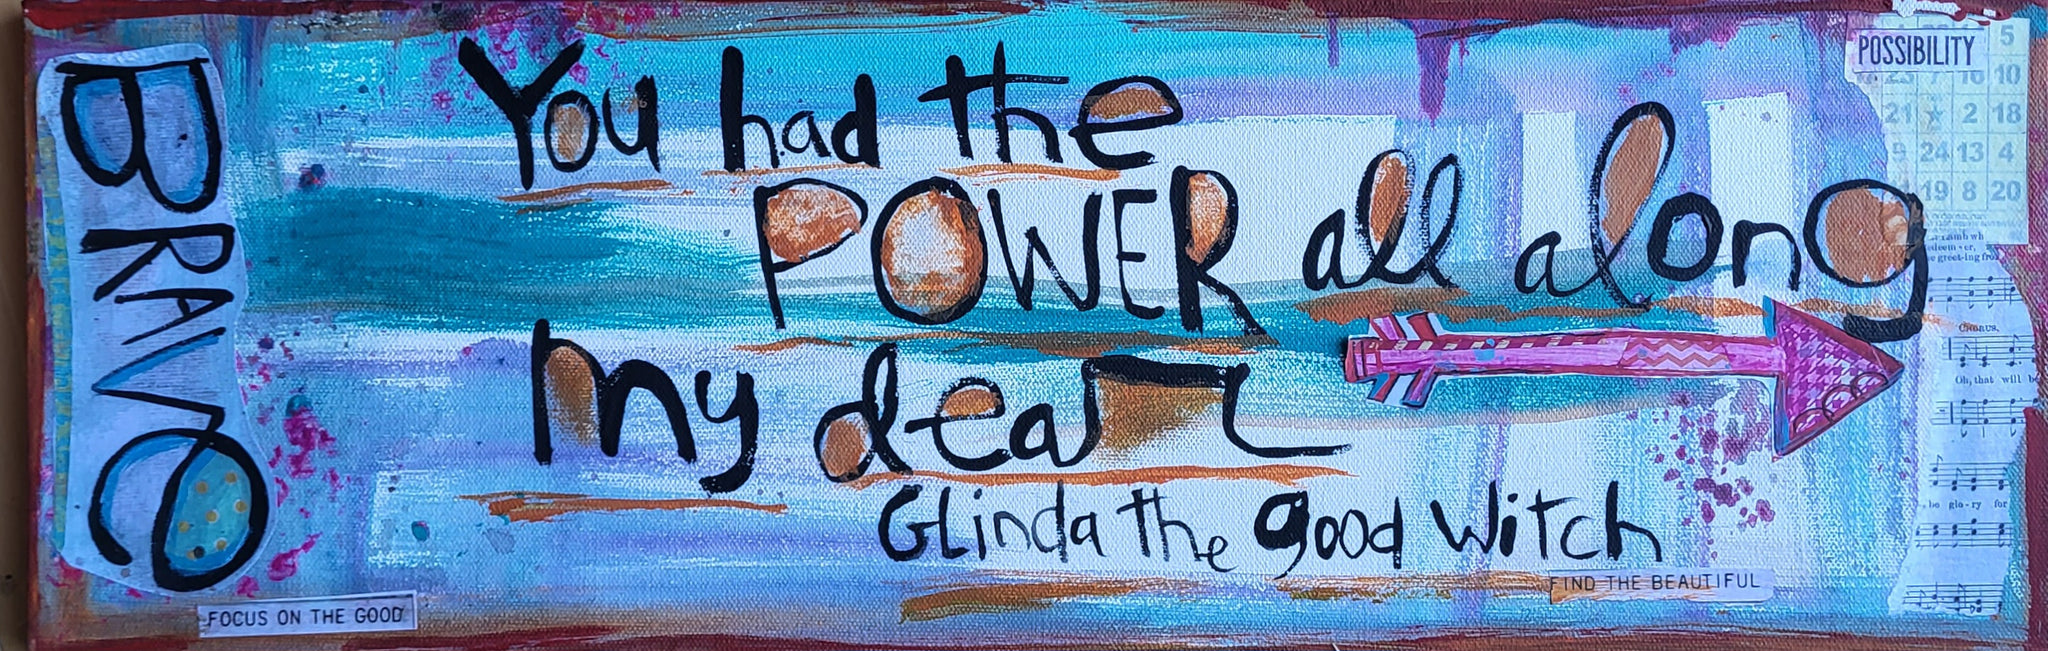 Glenda Good witch canvas